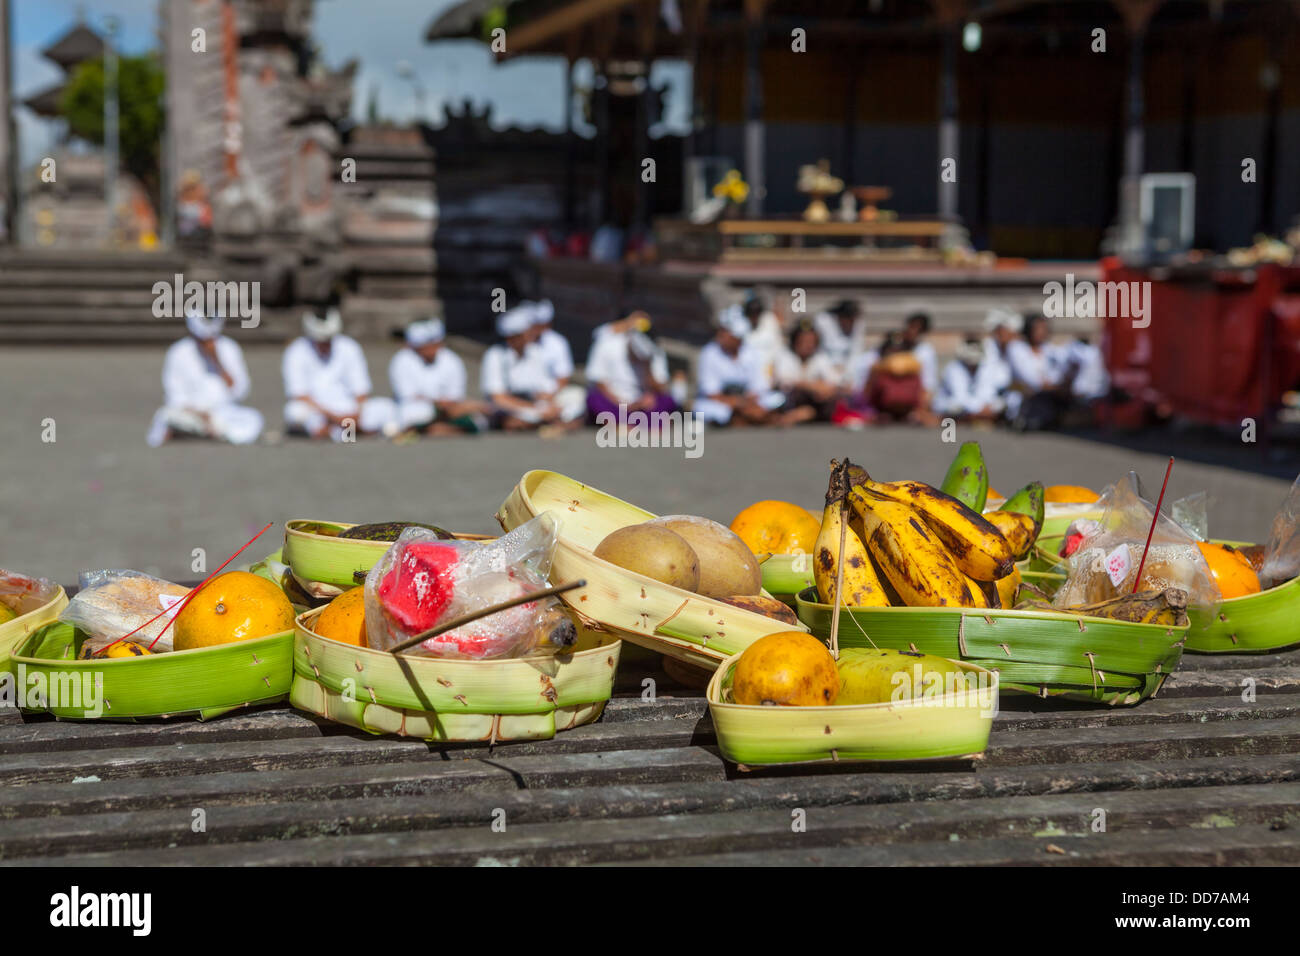 Indonesien, religiöse Angebot bei Pura Ulun Danu Batur Stockfoto